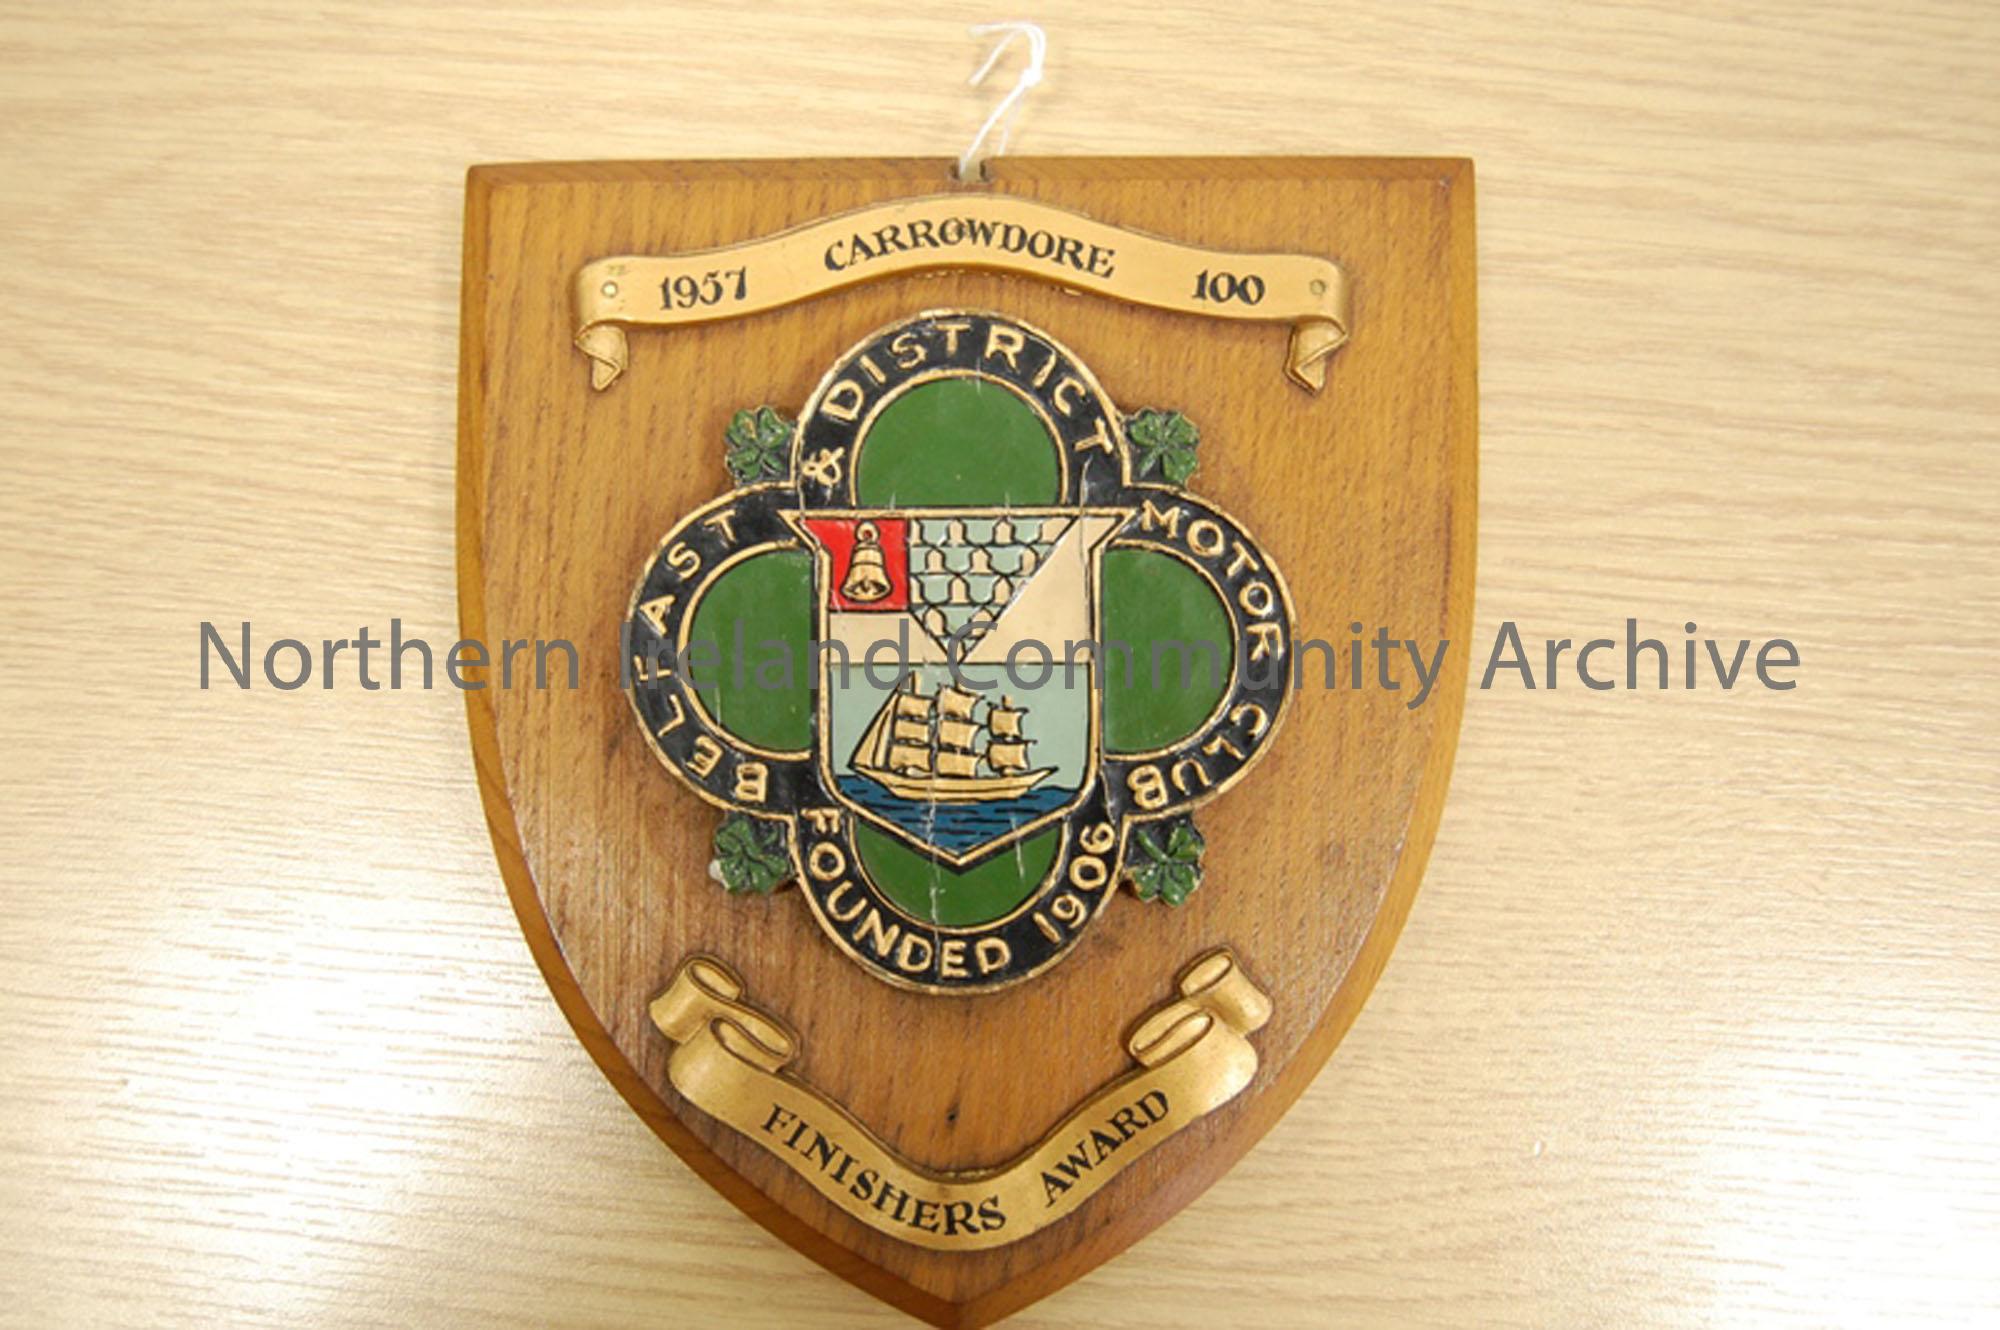 1957 Carrowdore 100 finishers award plaque